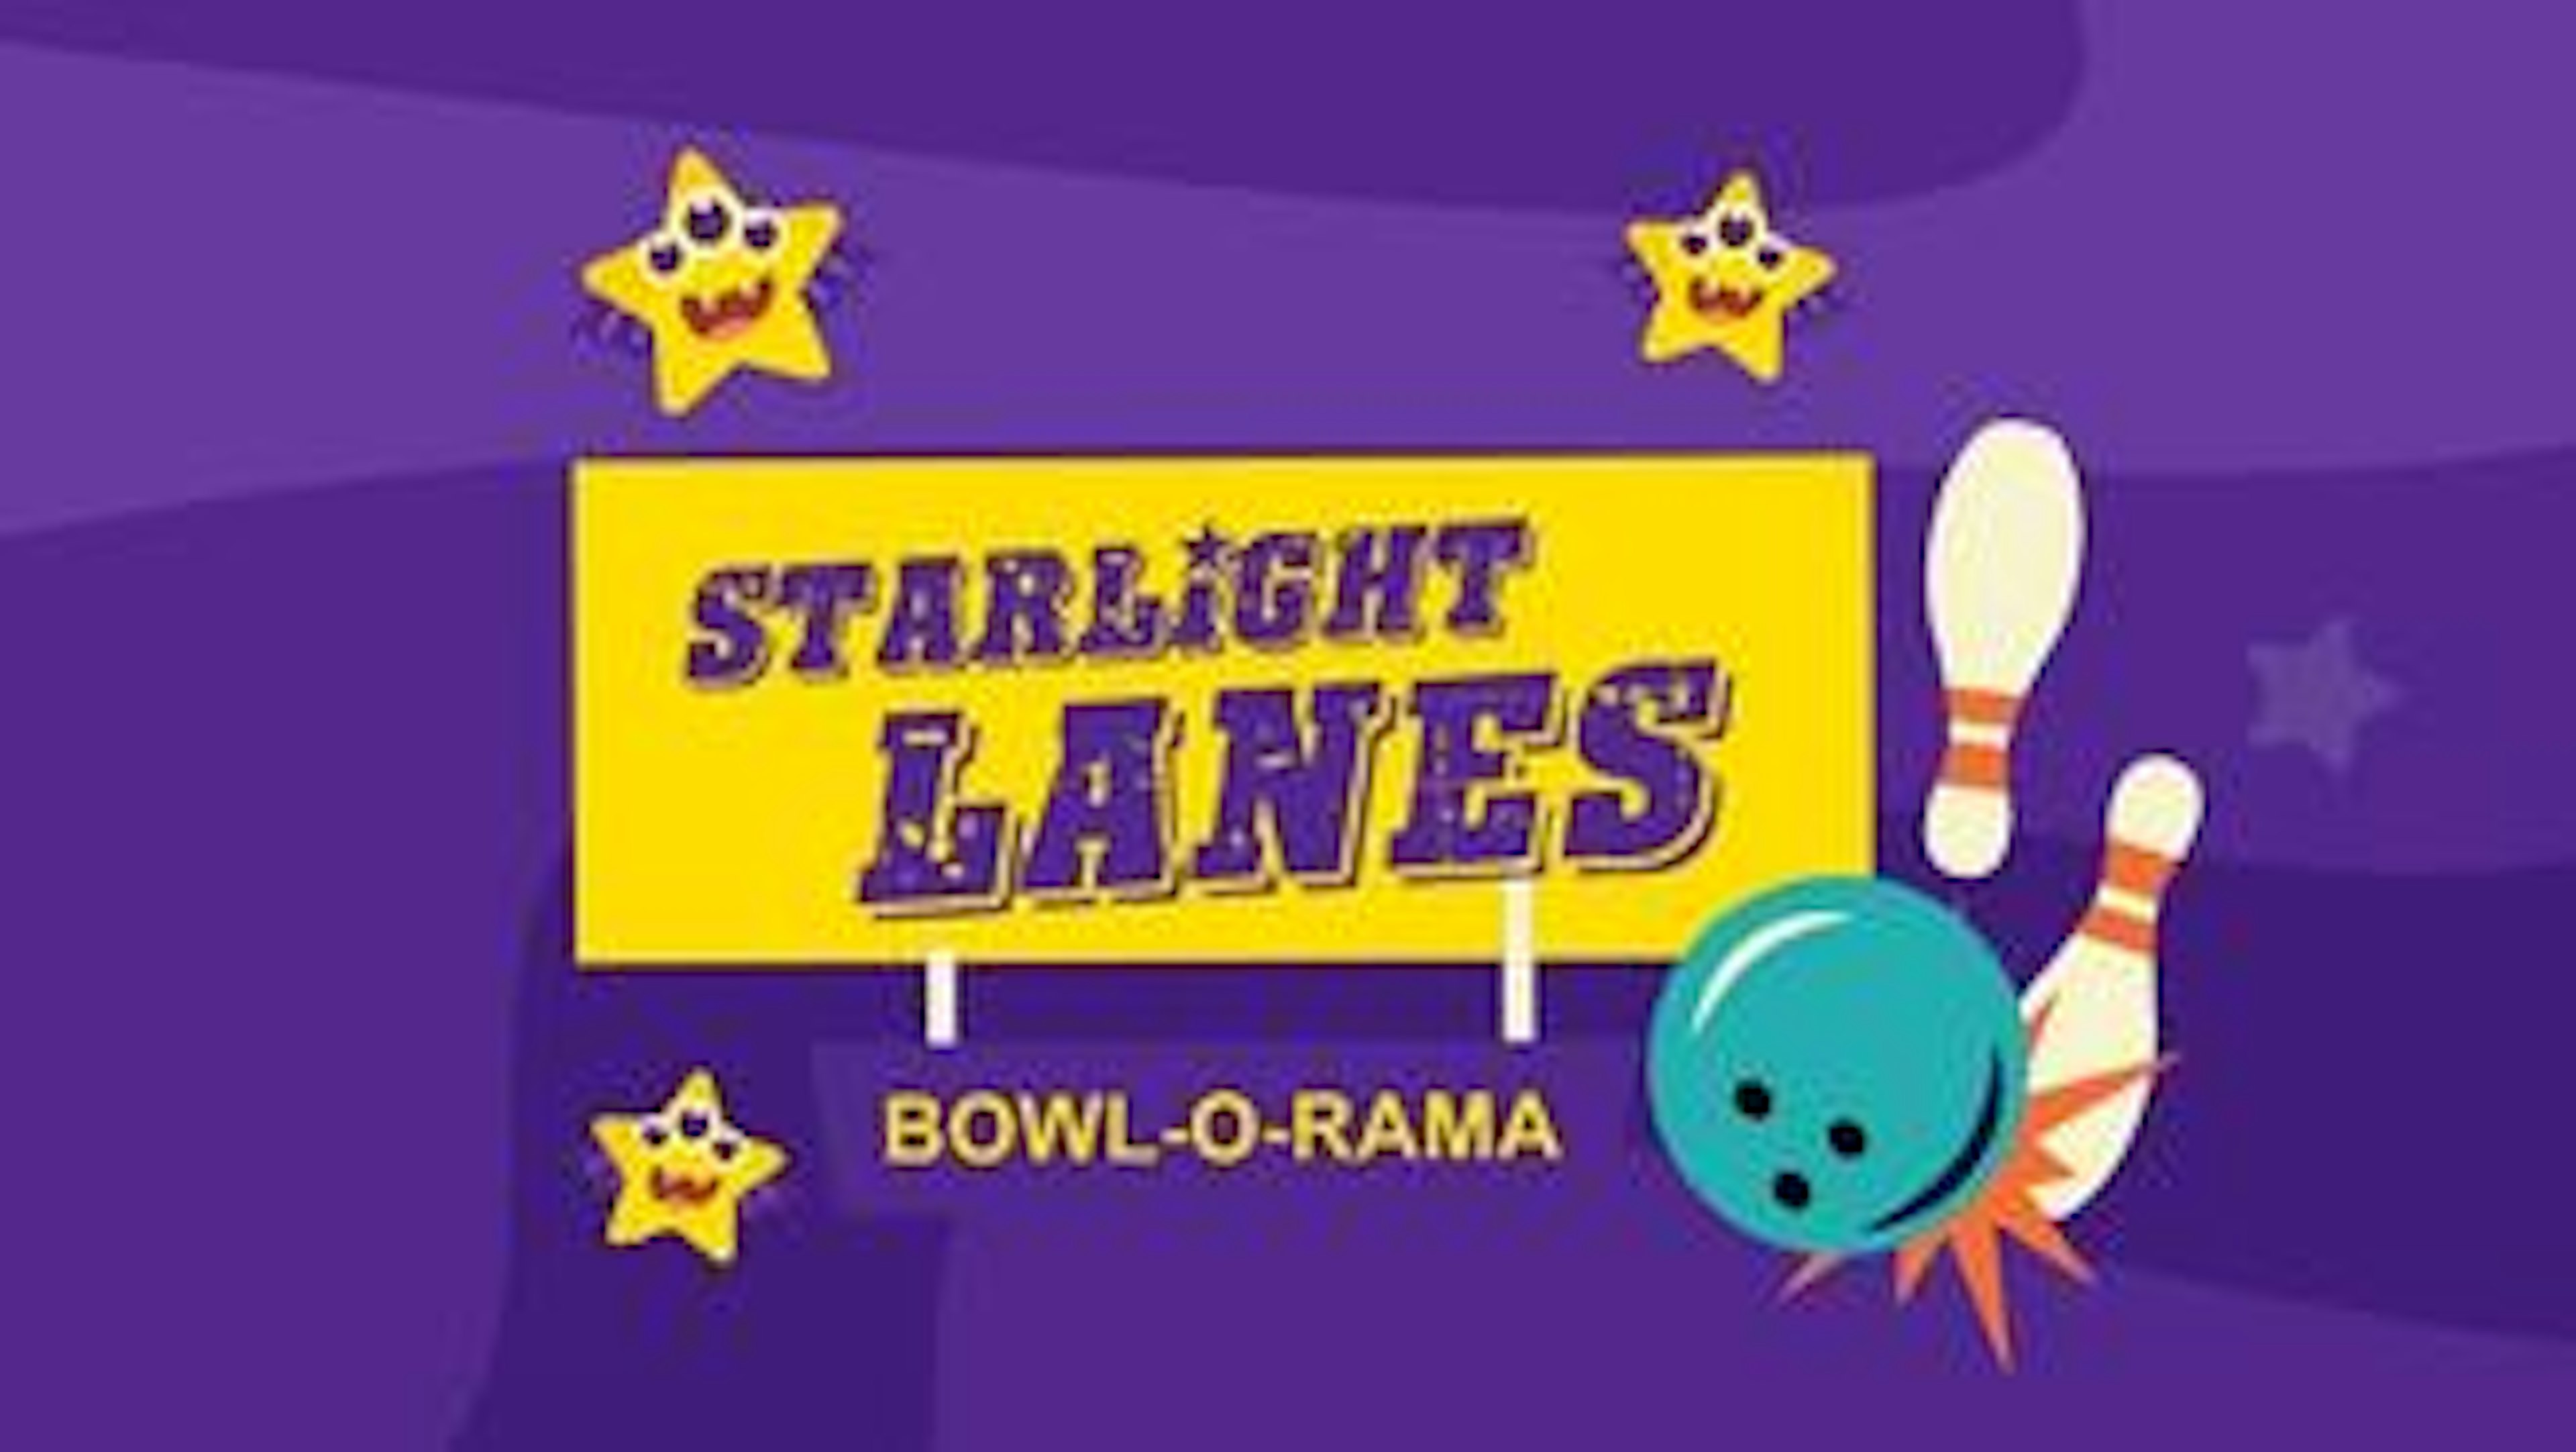 Cover Image for Starlight Lanes Bowl-O-Rama